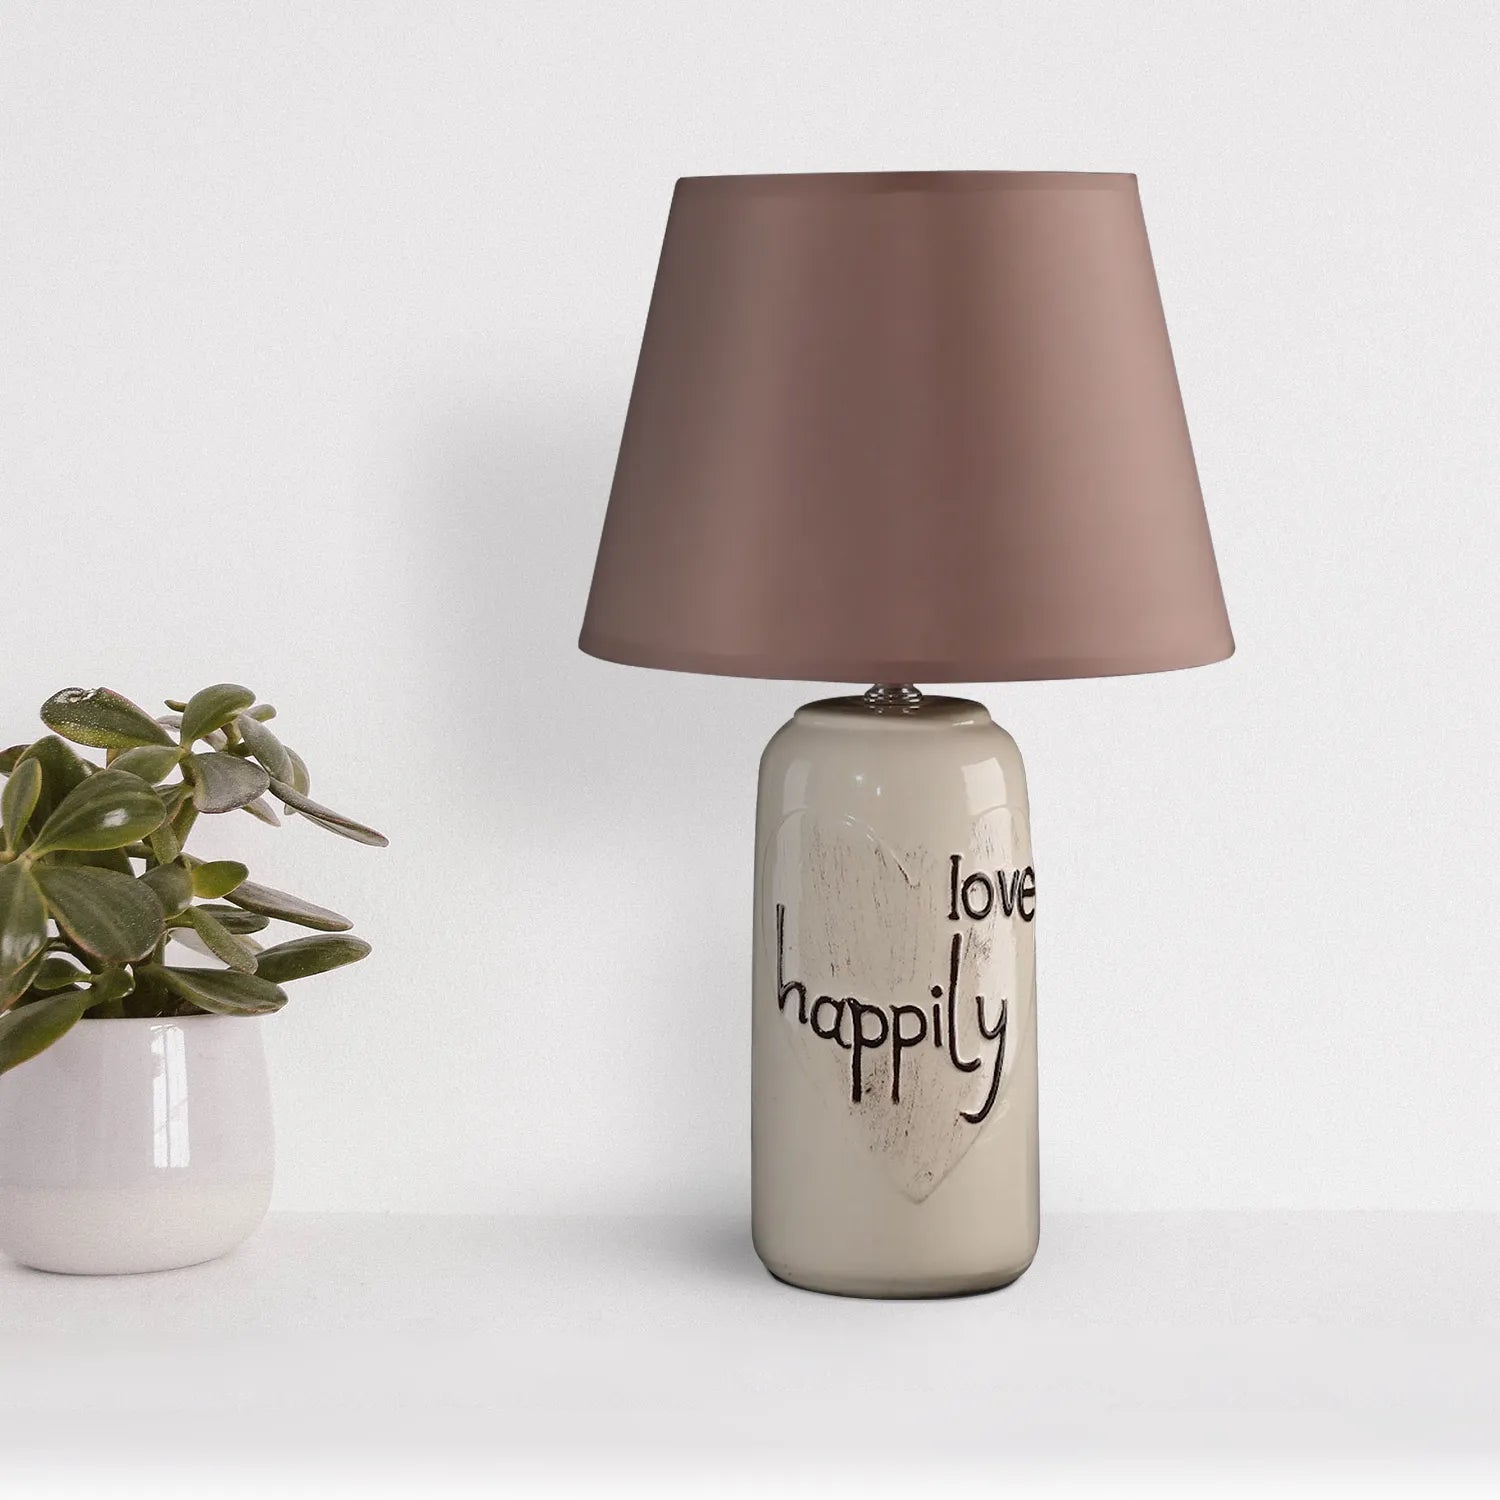 Word Text Plugin Bedside Table Lamp Ceramic Light~5161